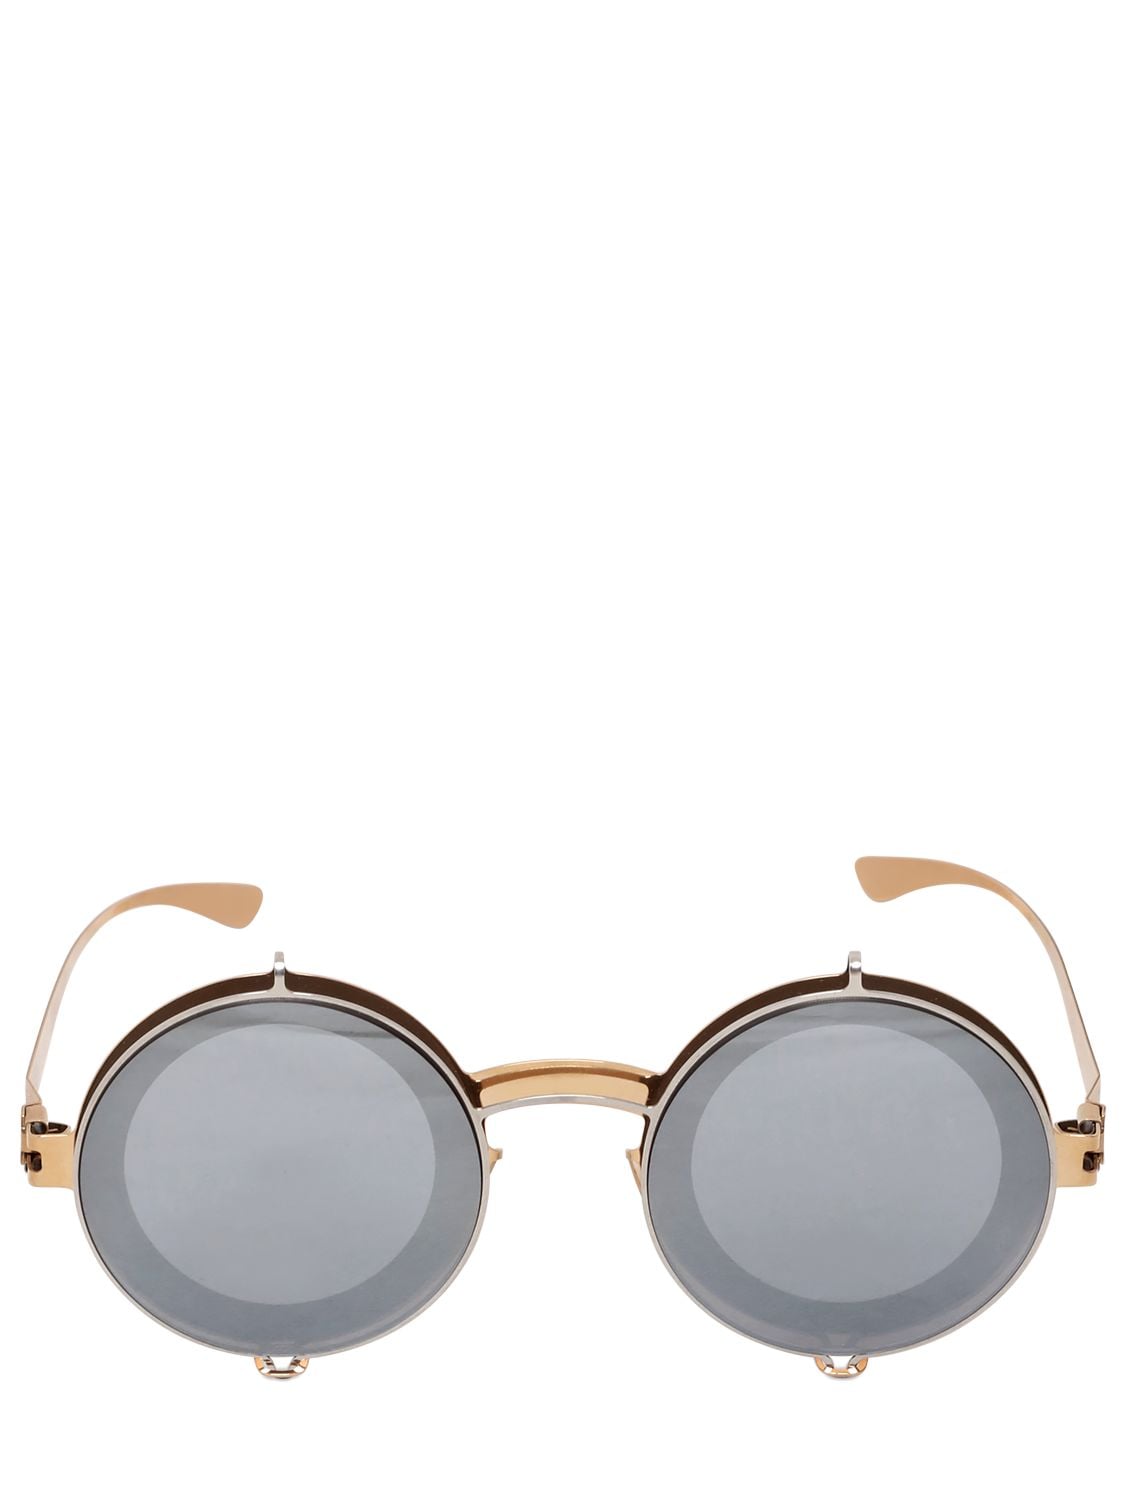 Mykita Damir Doma Fedor Round Sunglasses In Gold/silver | ModeSens